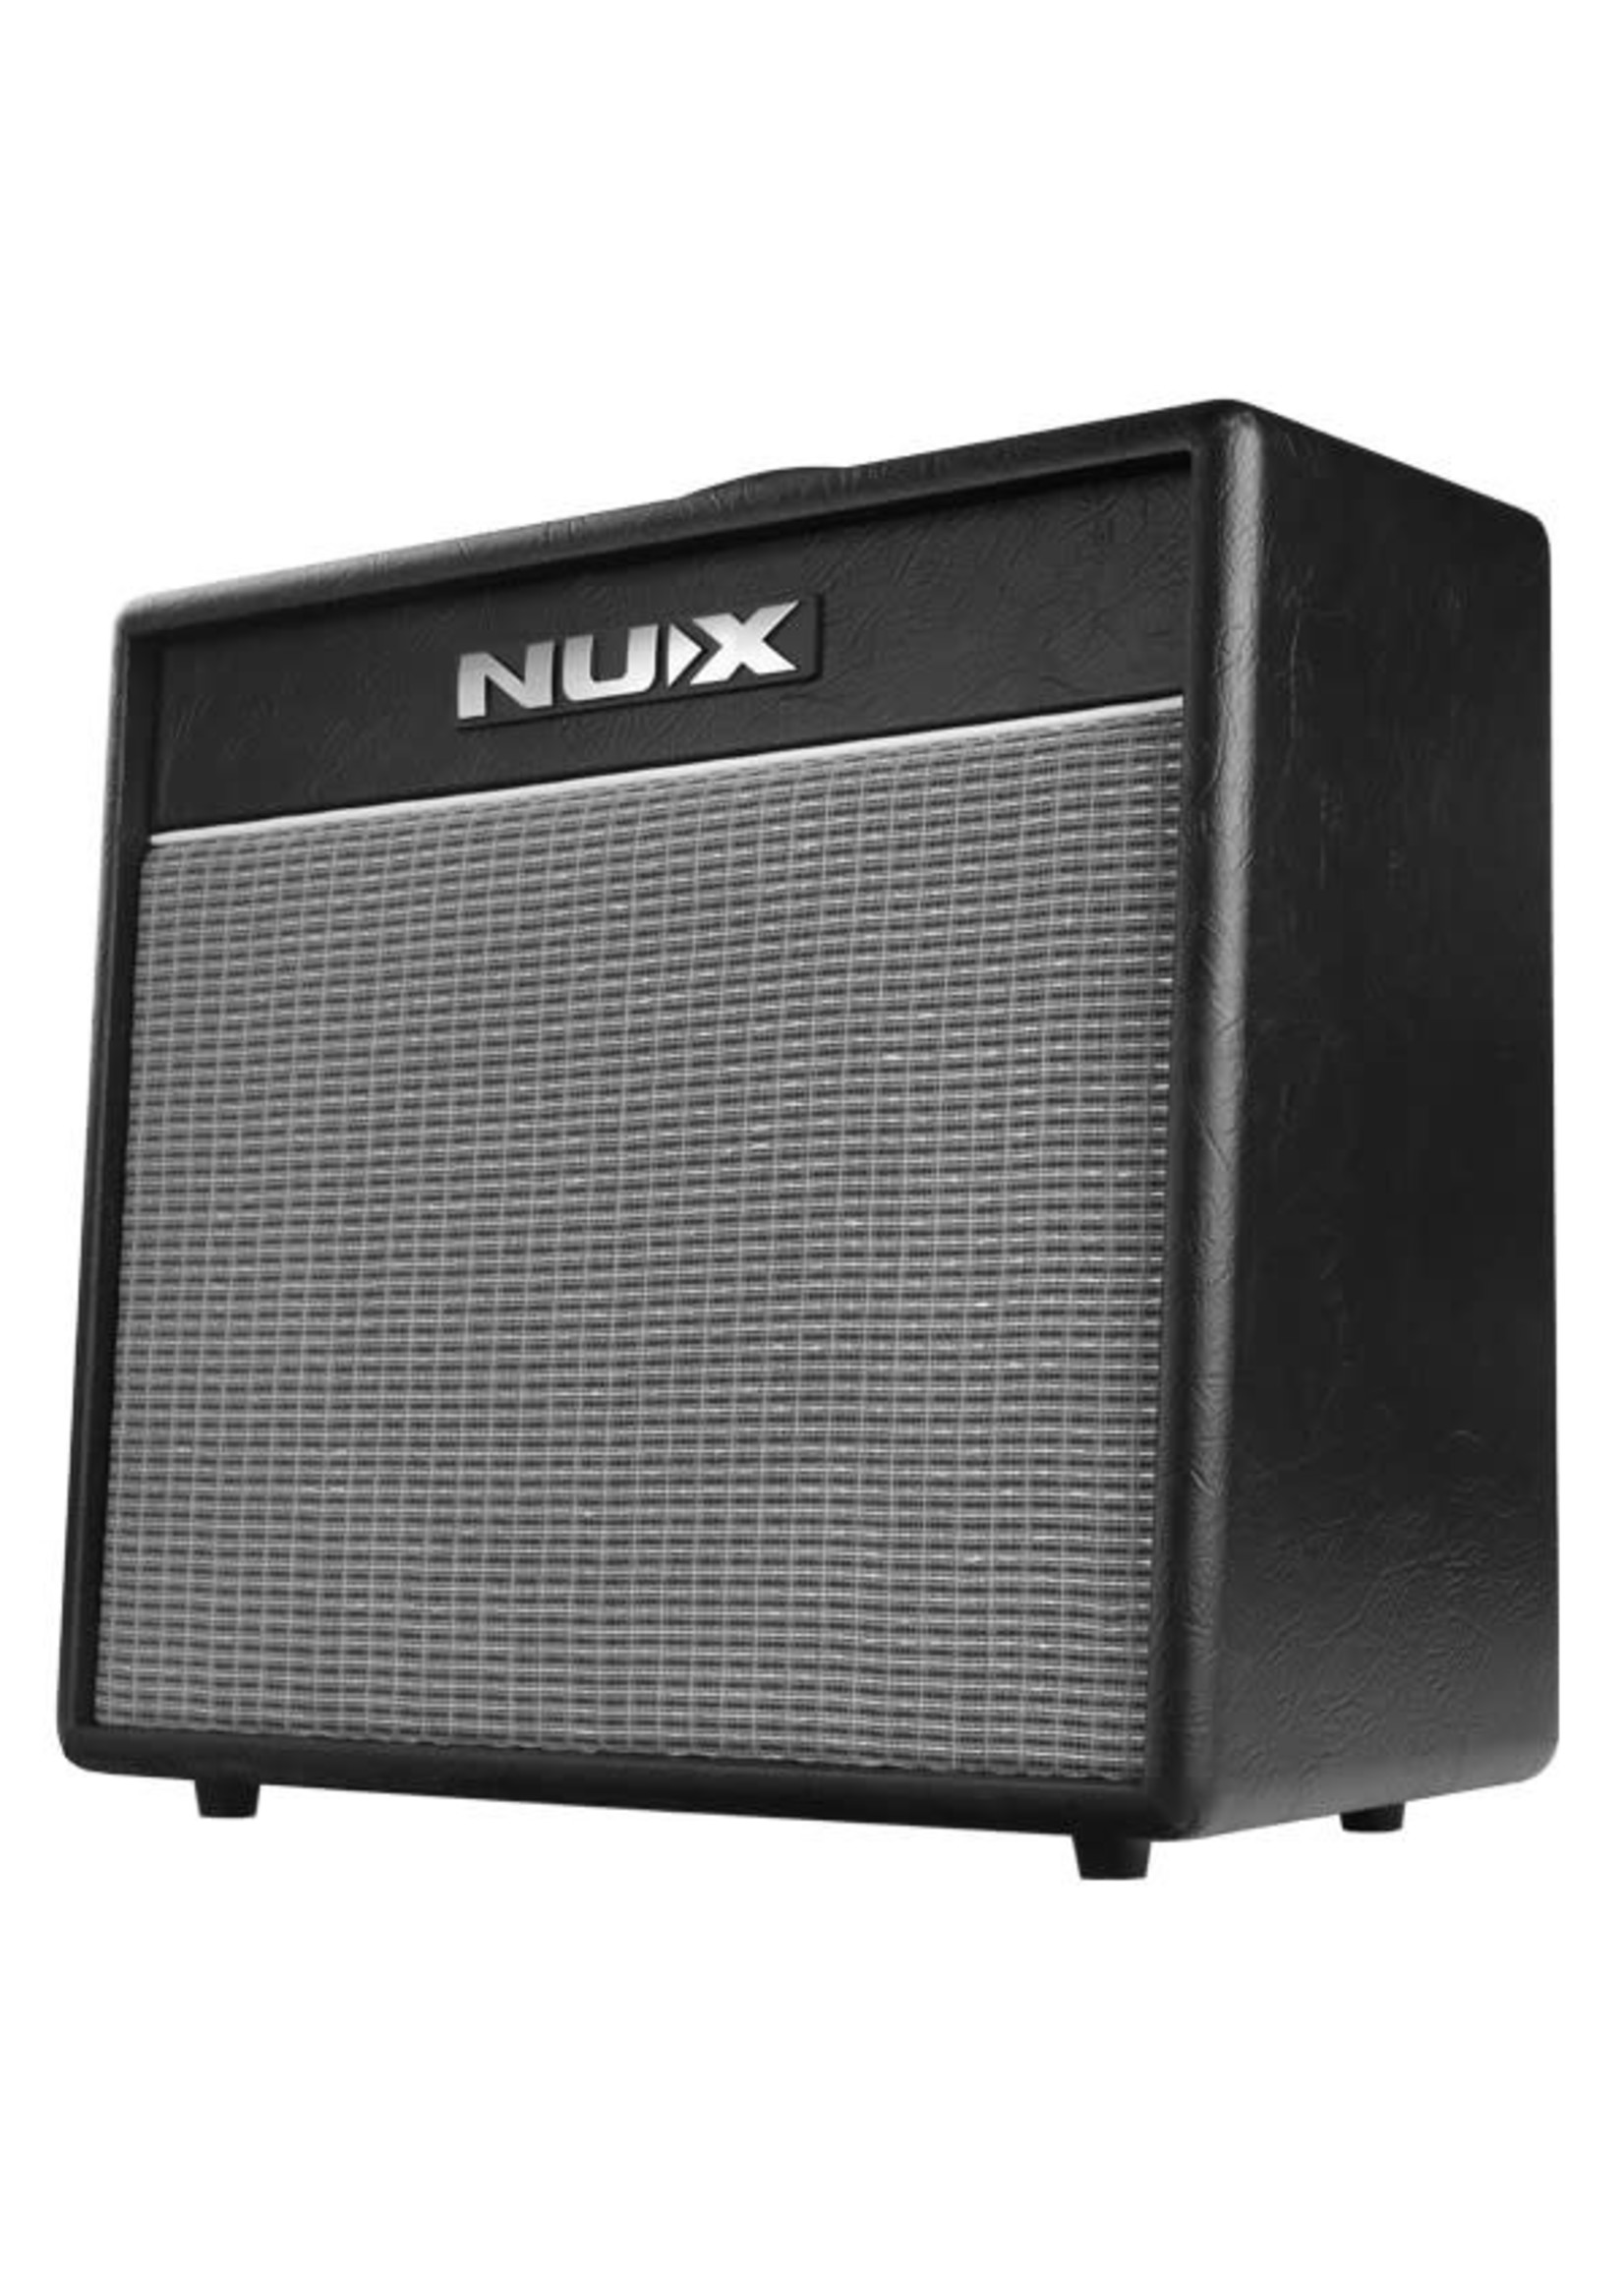 Nux NUX 40-watt 10" Bluetooth Electric Guitar Amplifier Item ID: MIGHTY-40BT